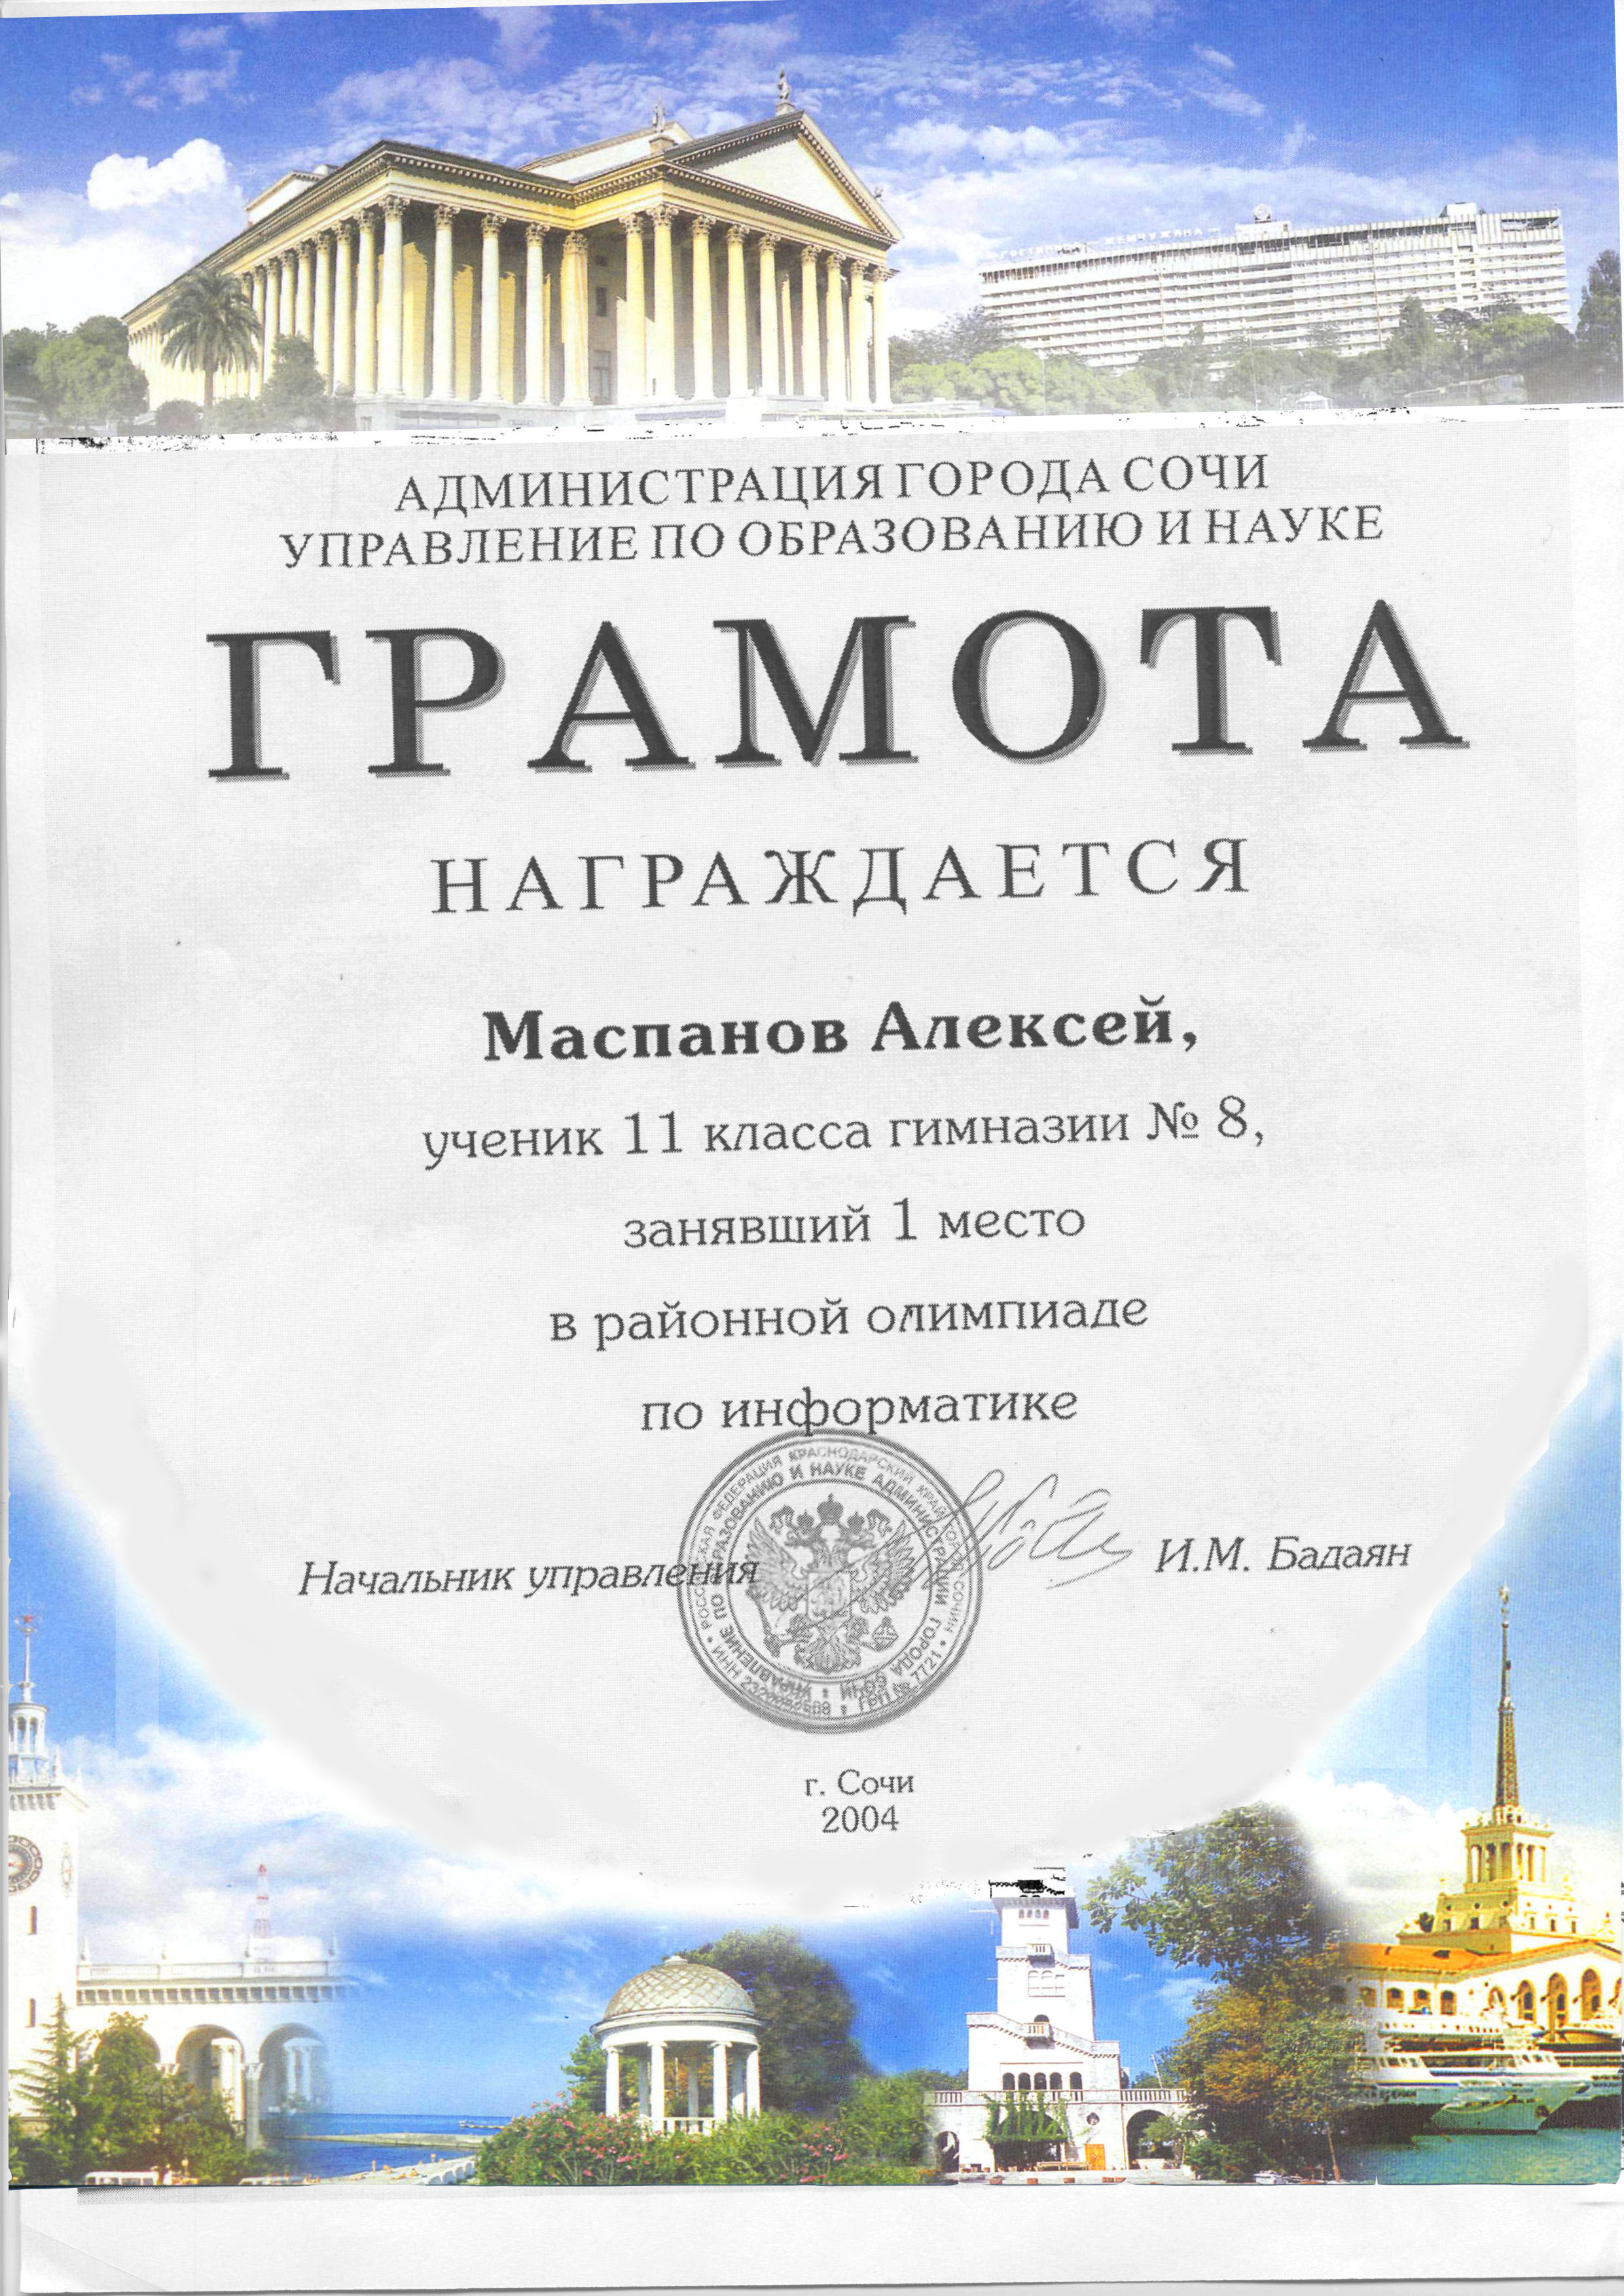 2004-Maspanov-olim